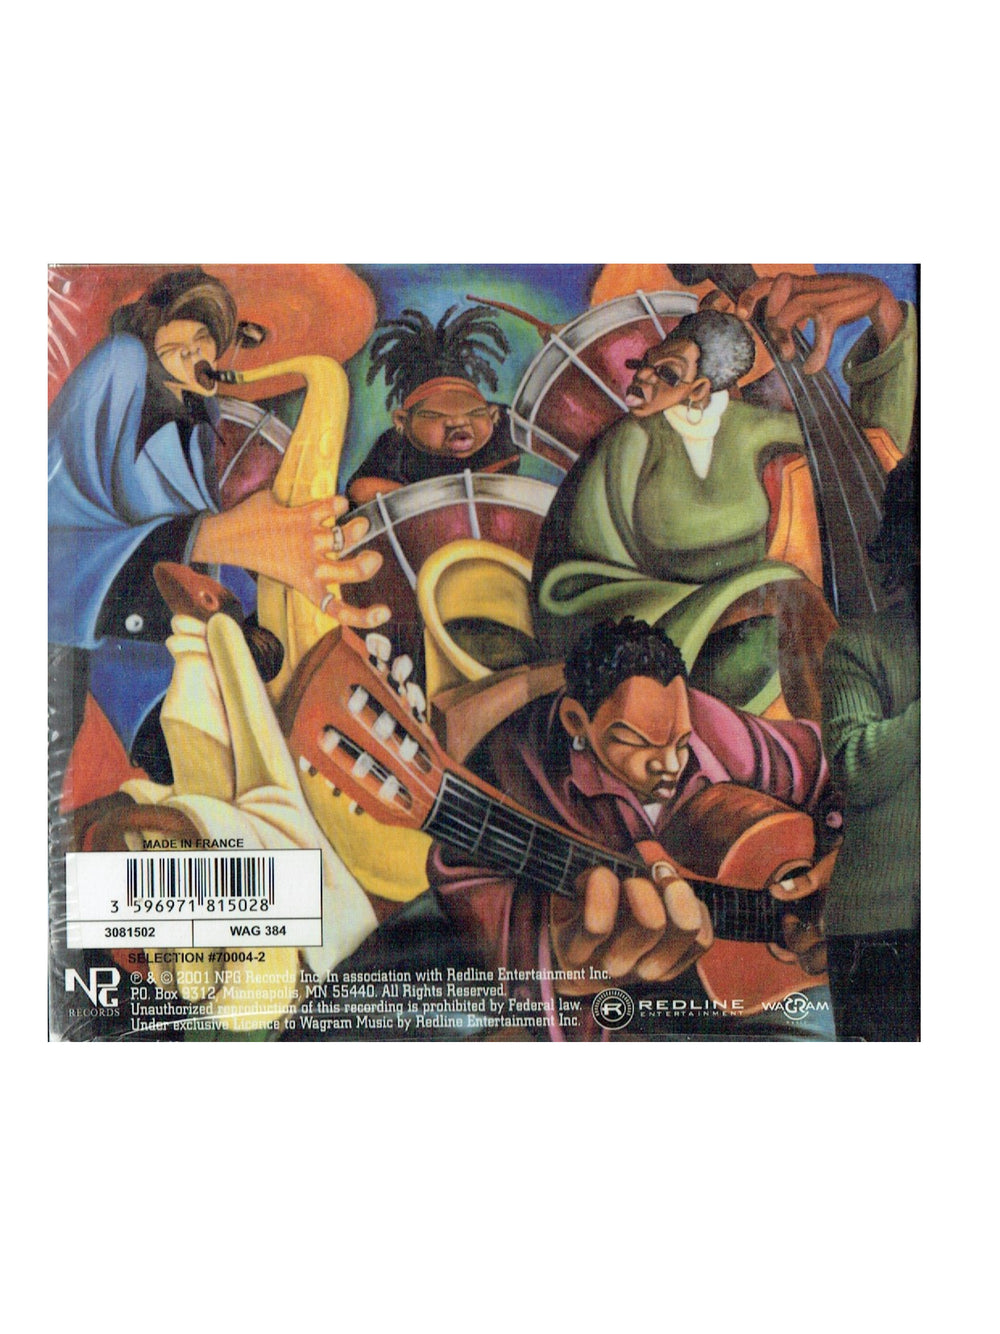 Prince – The Rainbow Children CD Album 21 Tracks Digi Pack Original 2001 SEALED